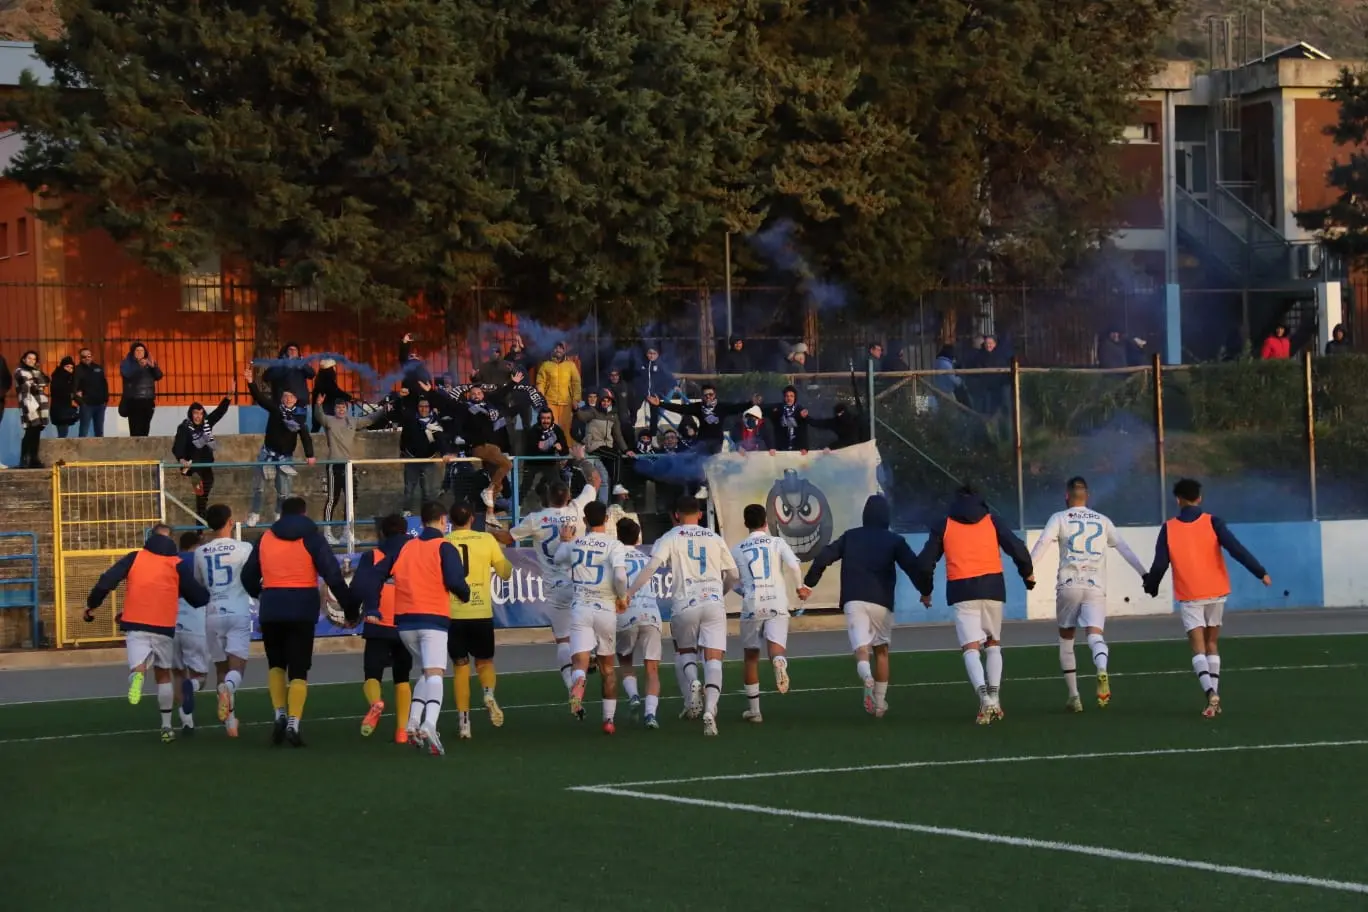 L’esultanza del Monastir al termine della partita vinta ieri per 5-0 sull’Arbus (foto Maria Elena Carboni - ASD Monastir)